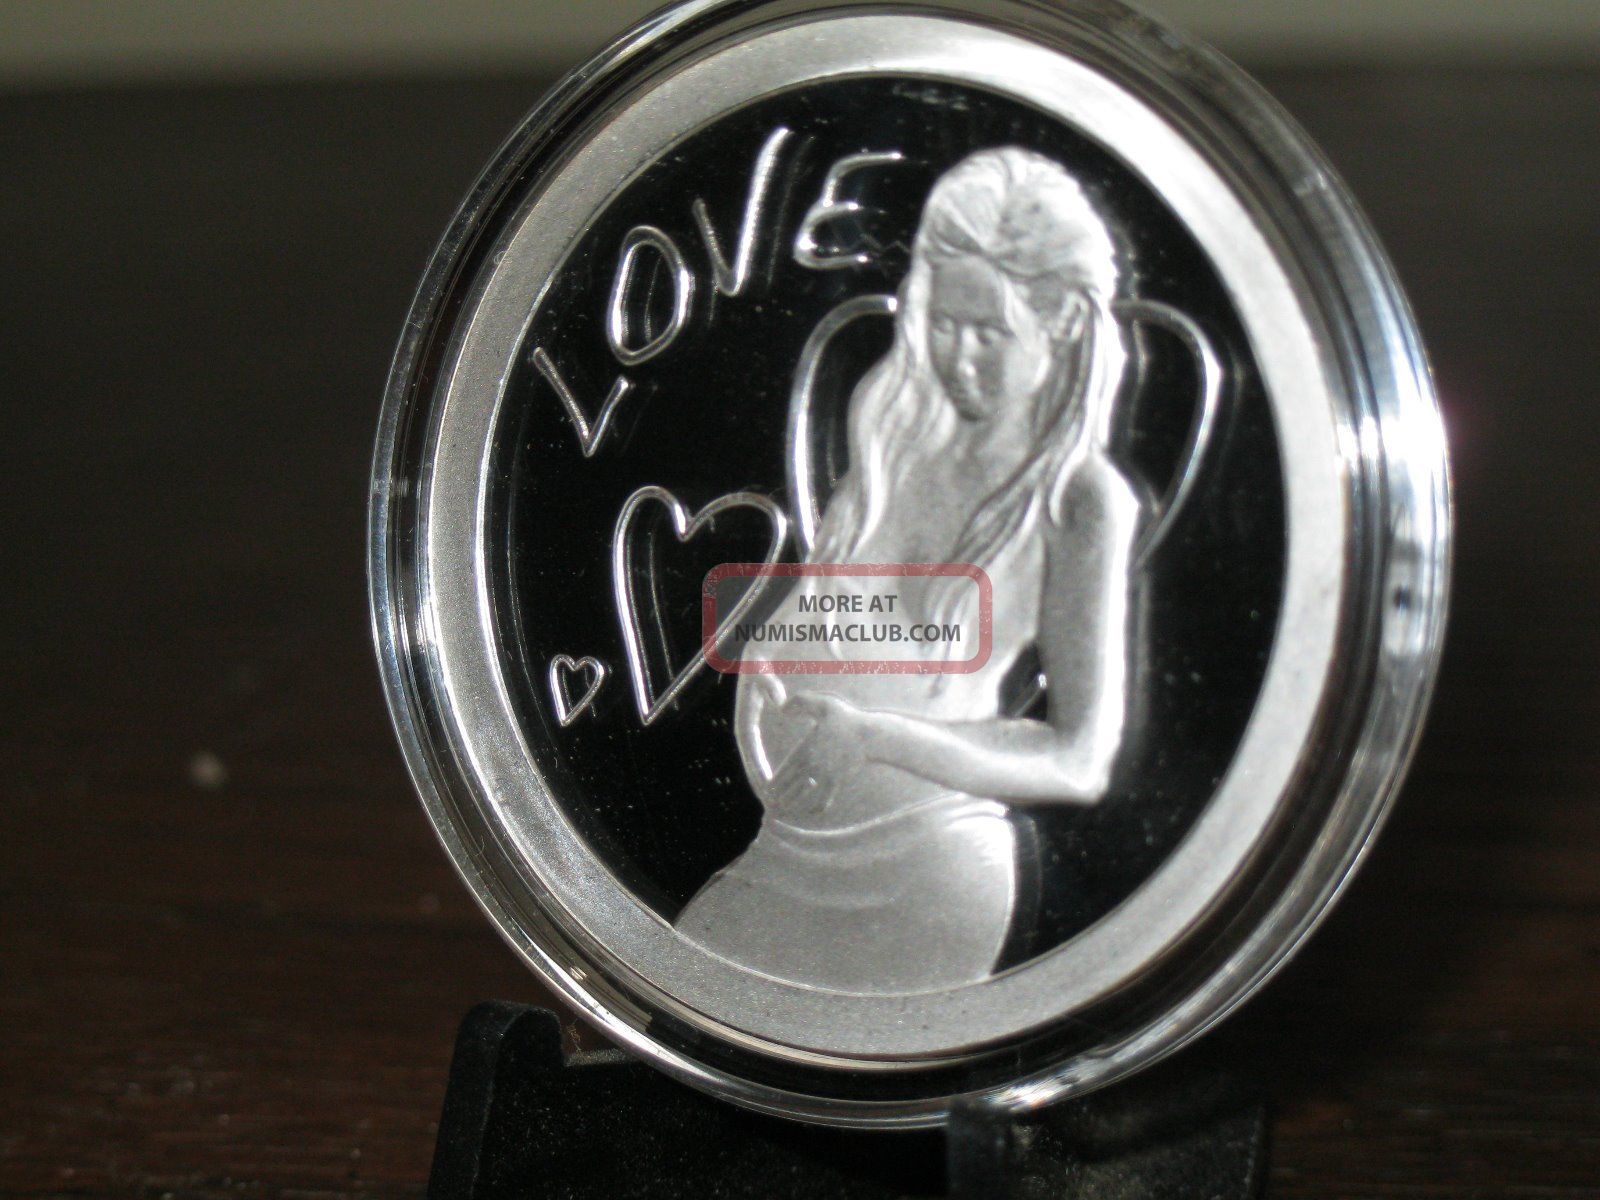 Silver Shield 2013 Bu Warbird/proof Love 1 Oz Silver Proof 504 Of 1000